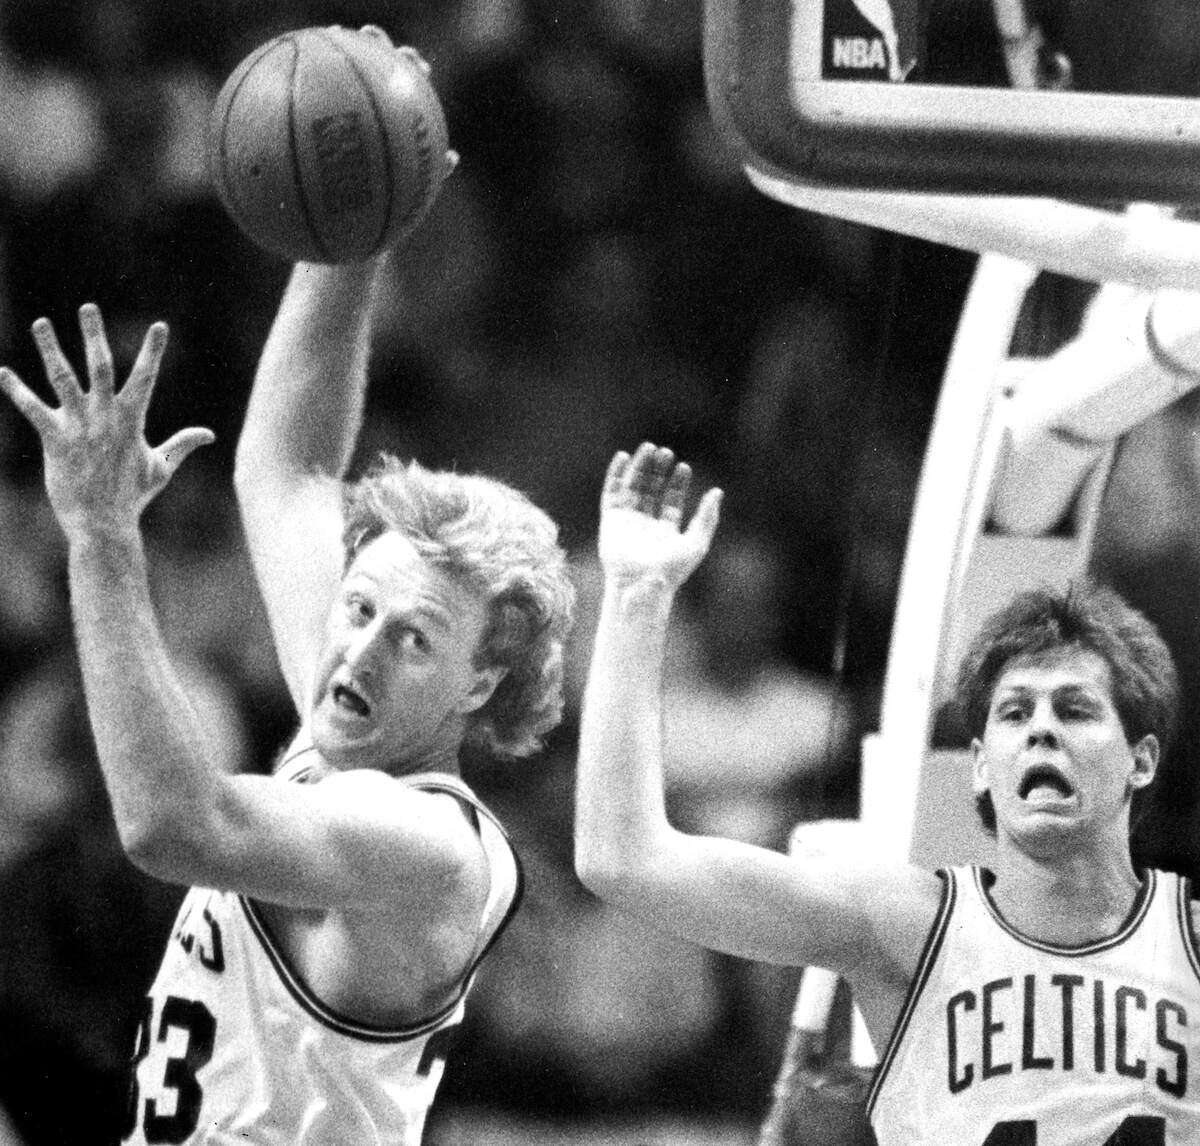 Boston Celtics' Larry Bird controls the ball over the Pistons' Joe Dumars with the Celtics' Danny Ainge